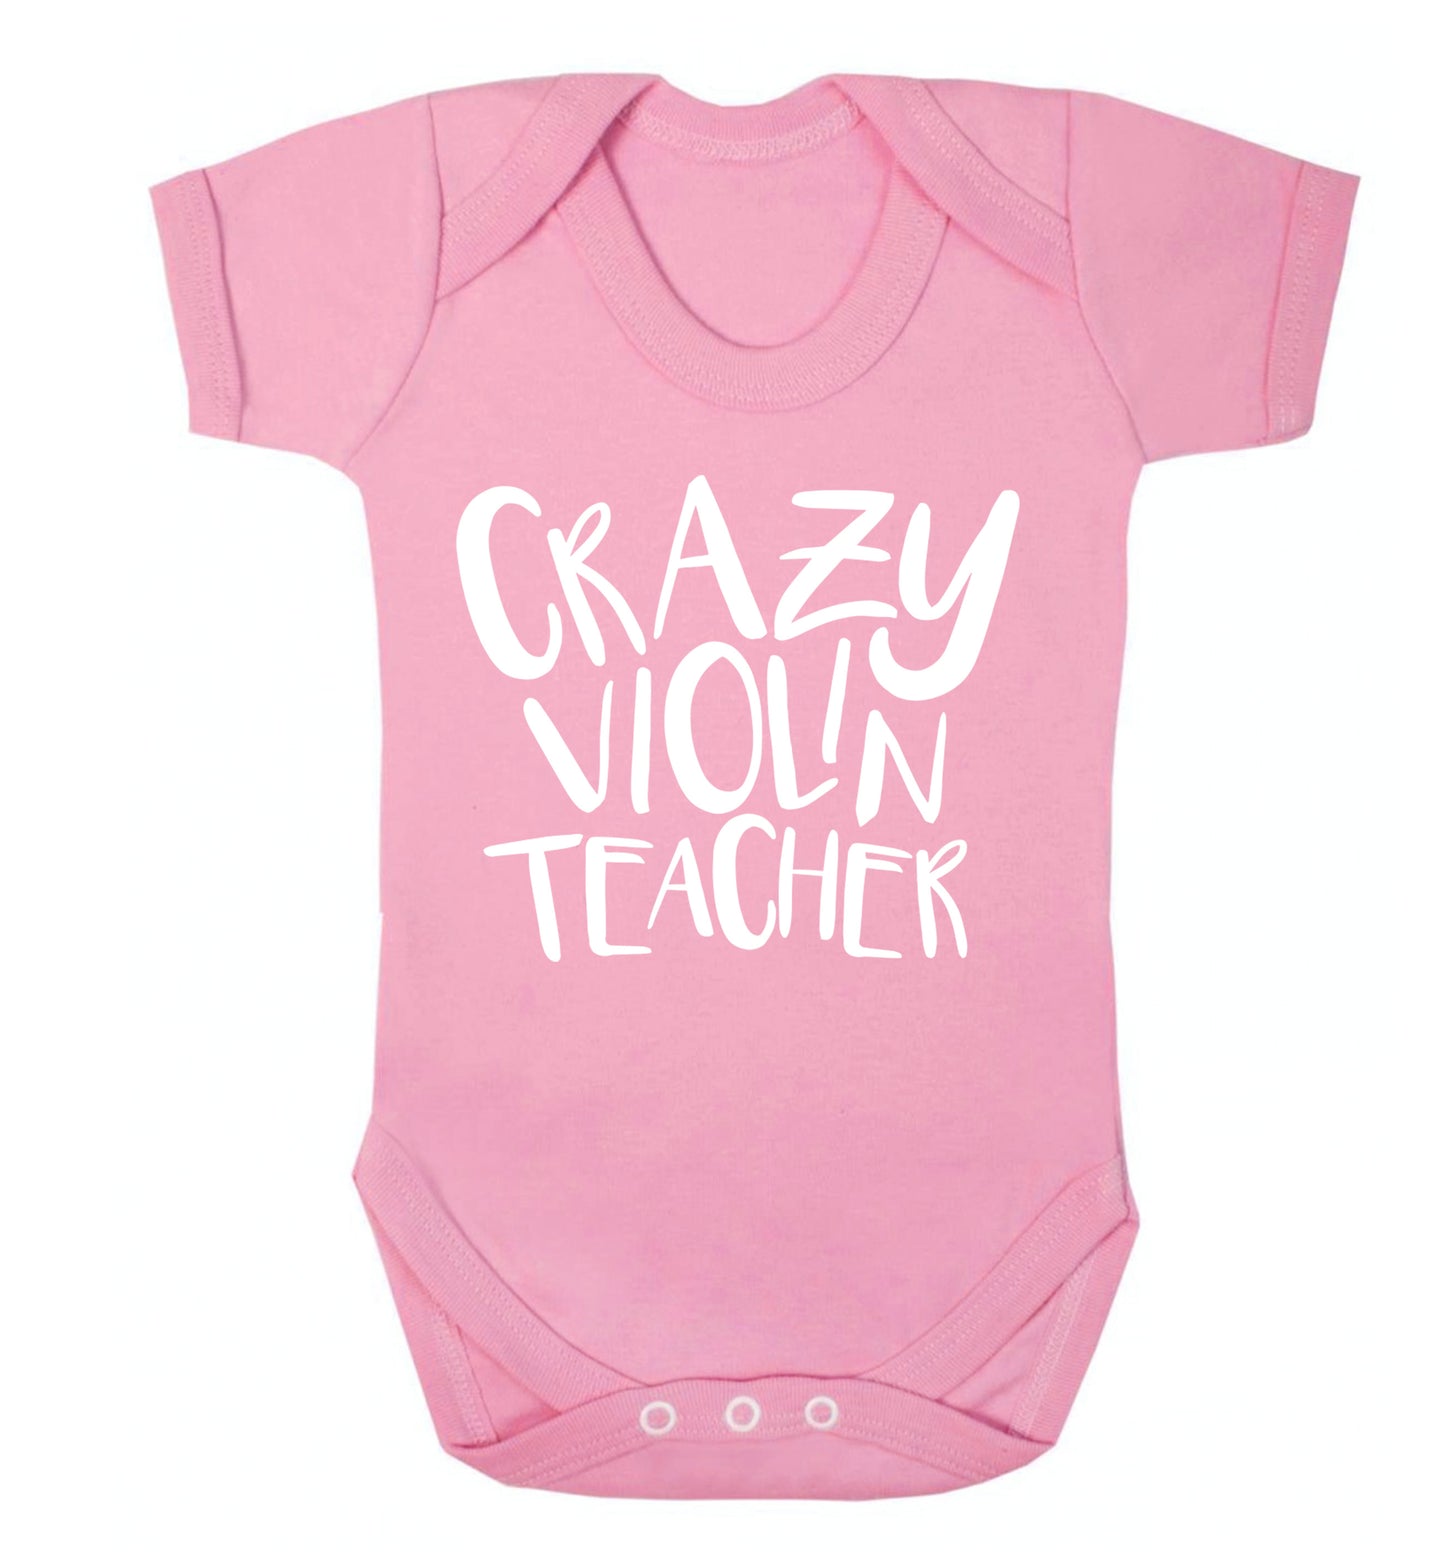 Crazy violin teacher Baby Vest pale pink 18-24 months